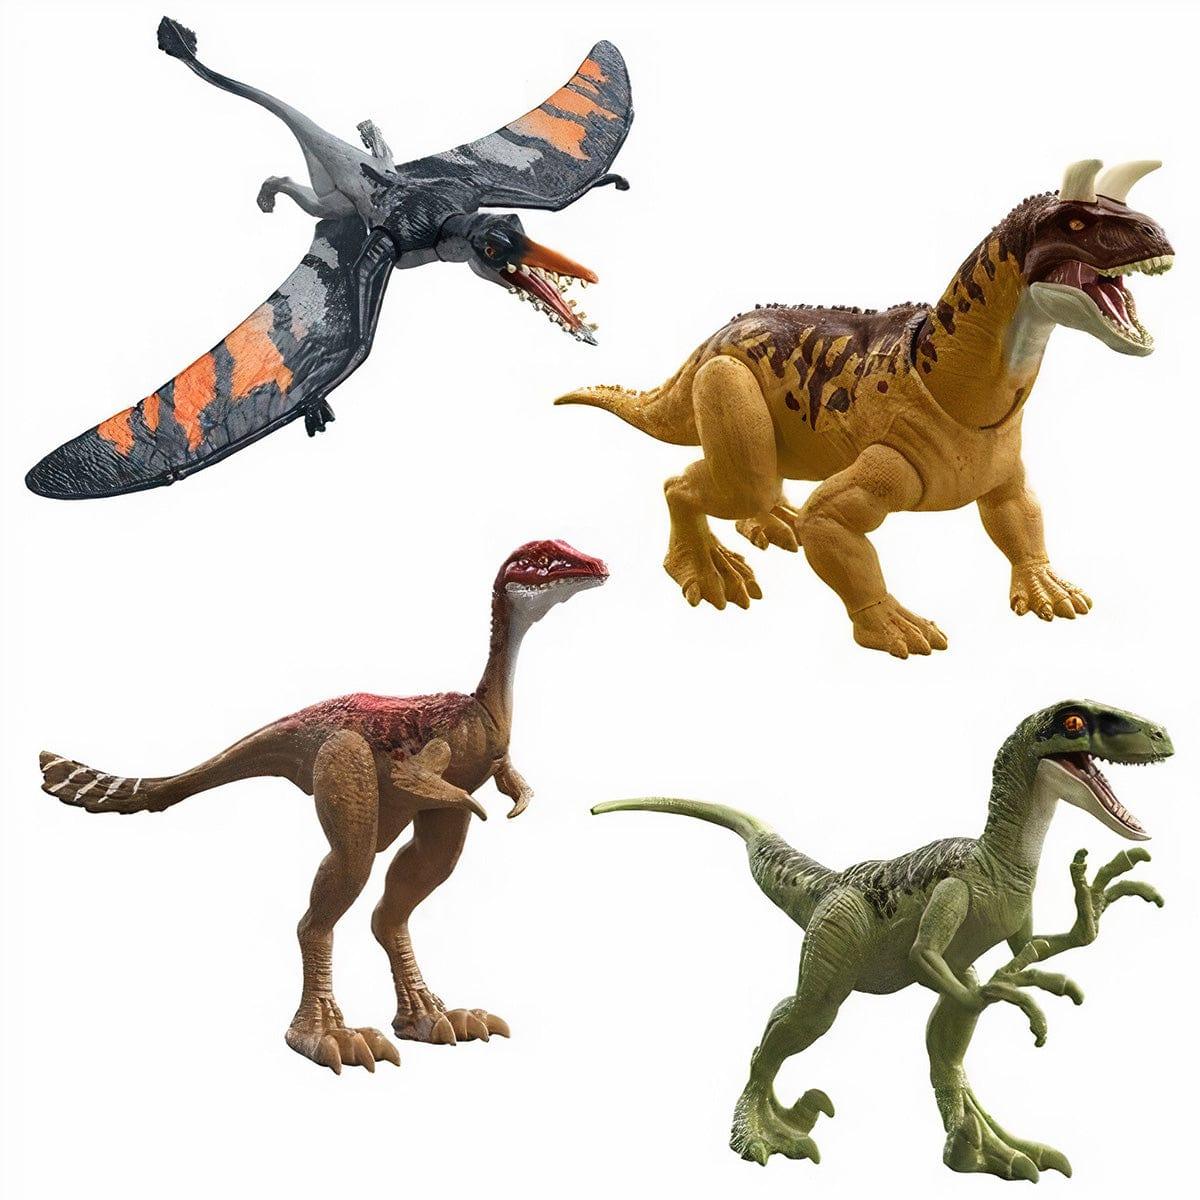 MATTEL CANADA INC. Toys & Games Jurassic World Dinosaur Figure, 7 in, Assortment, 1 Count